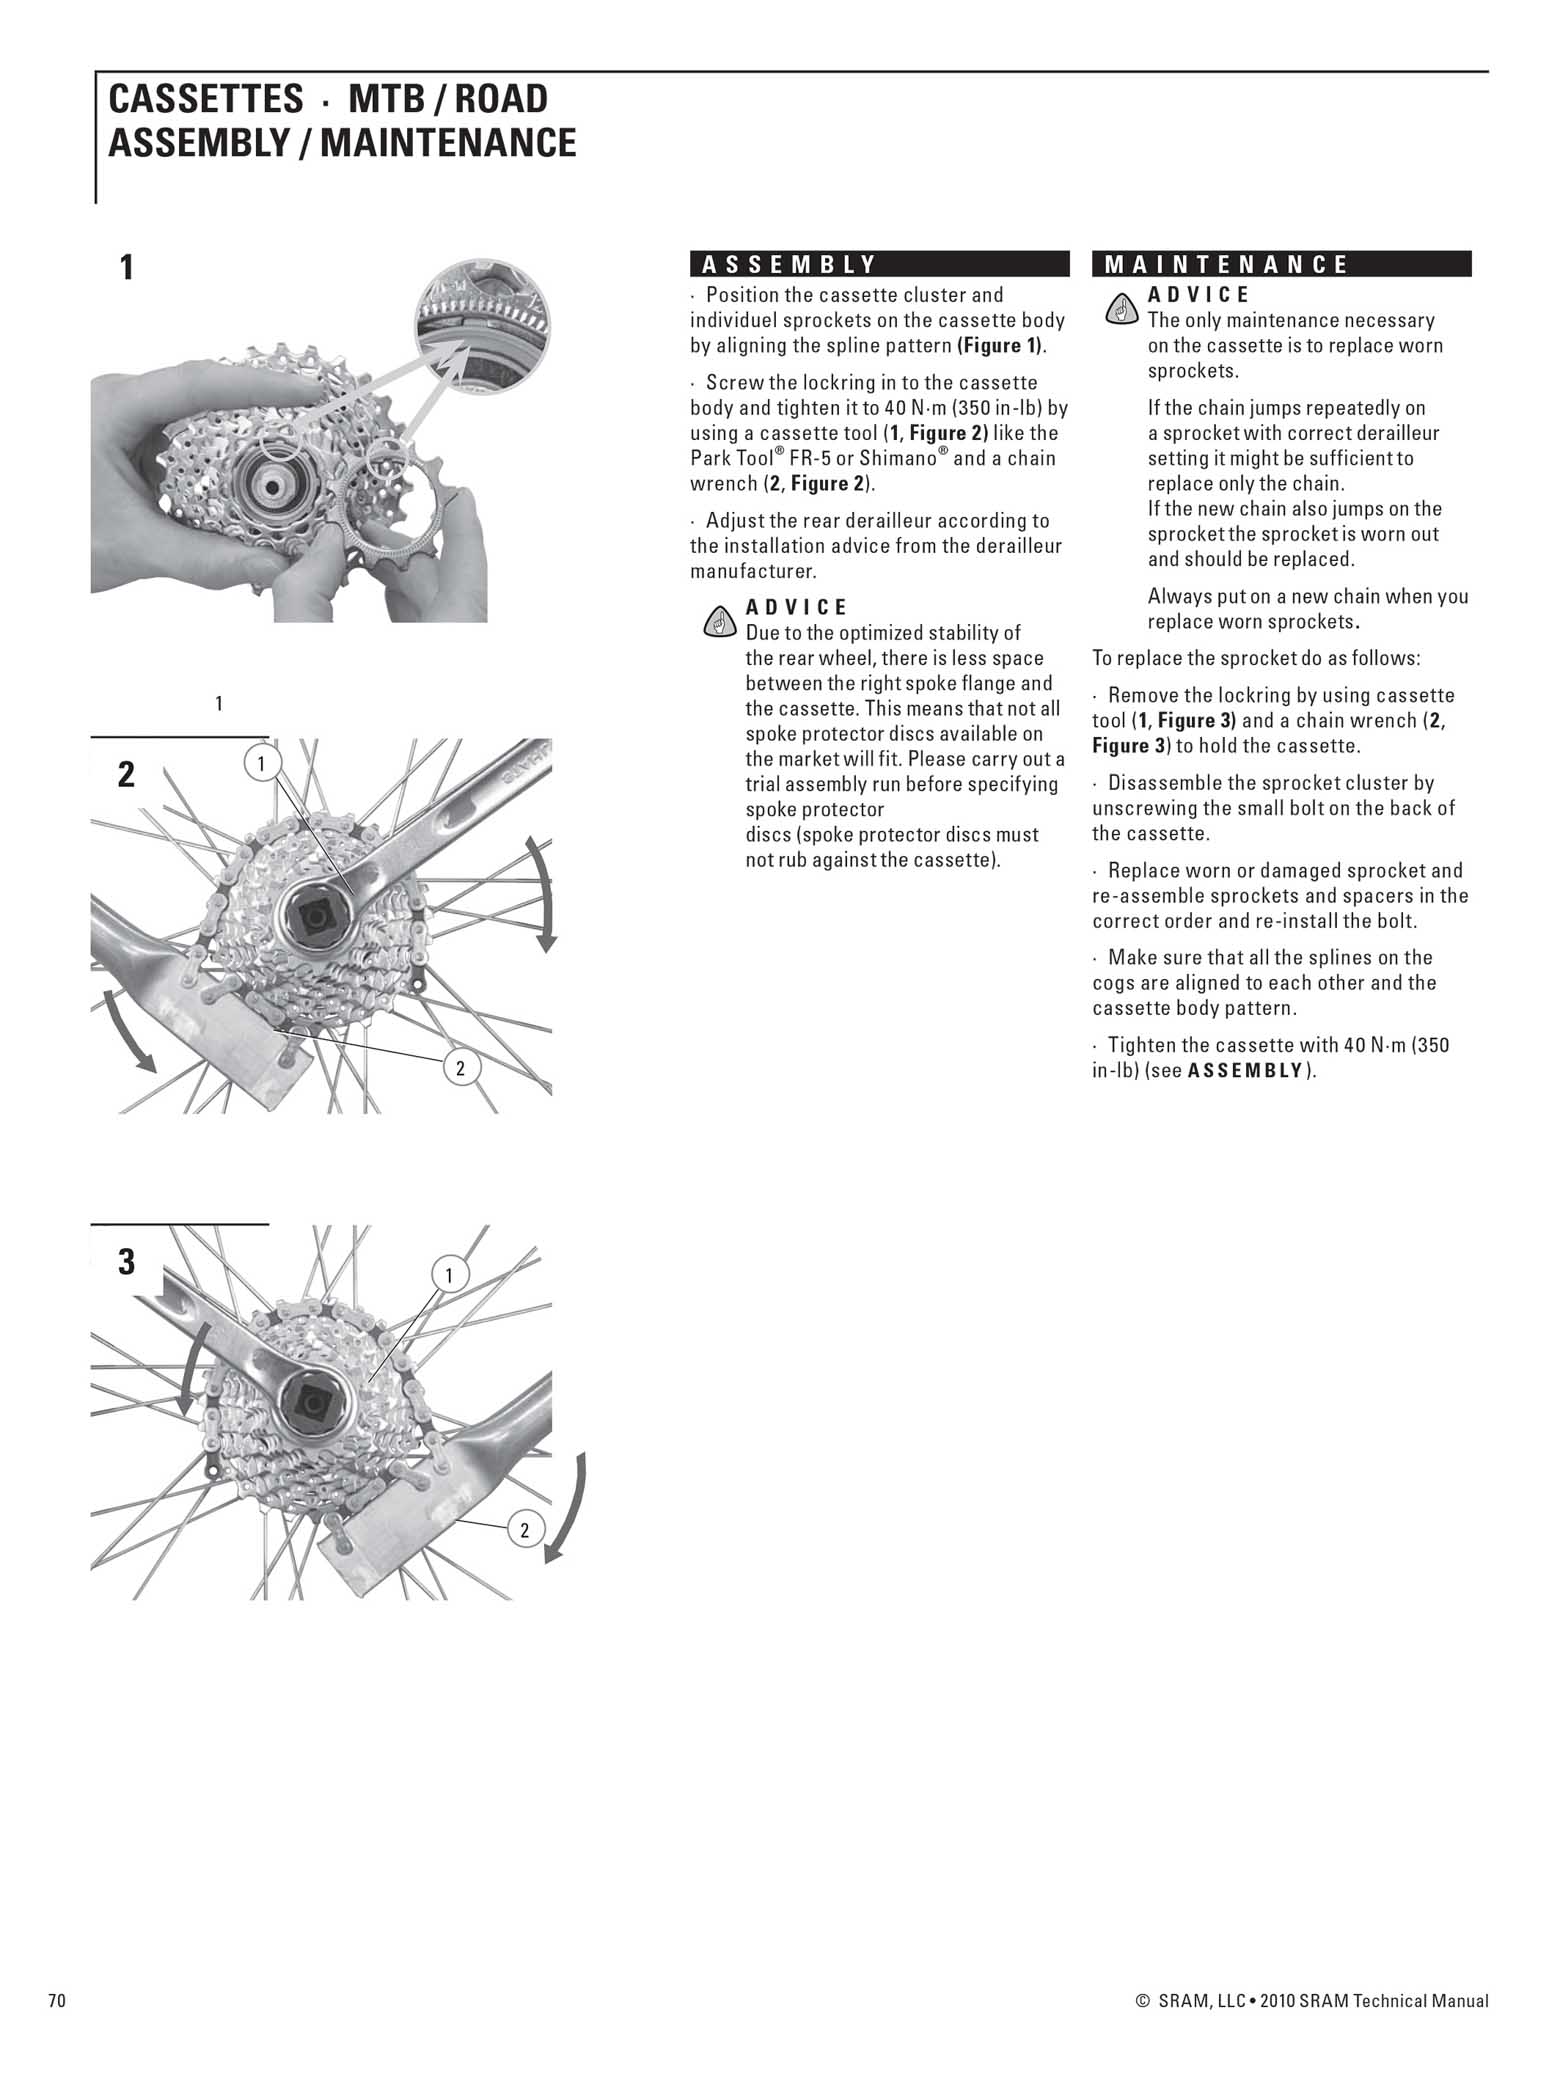 SRAM Technical Manual 2010 page 070 main image